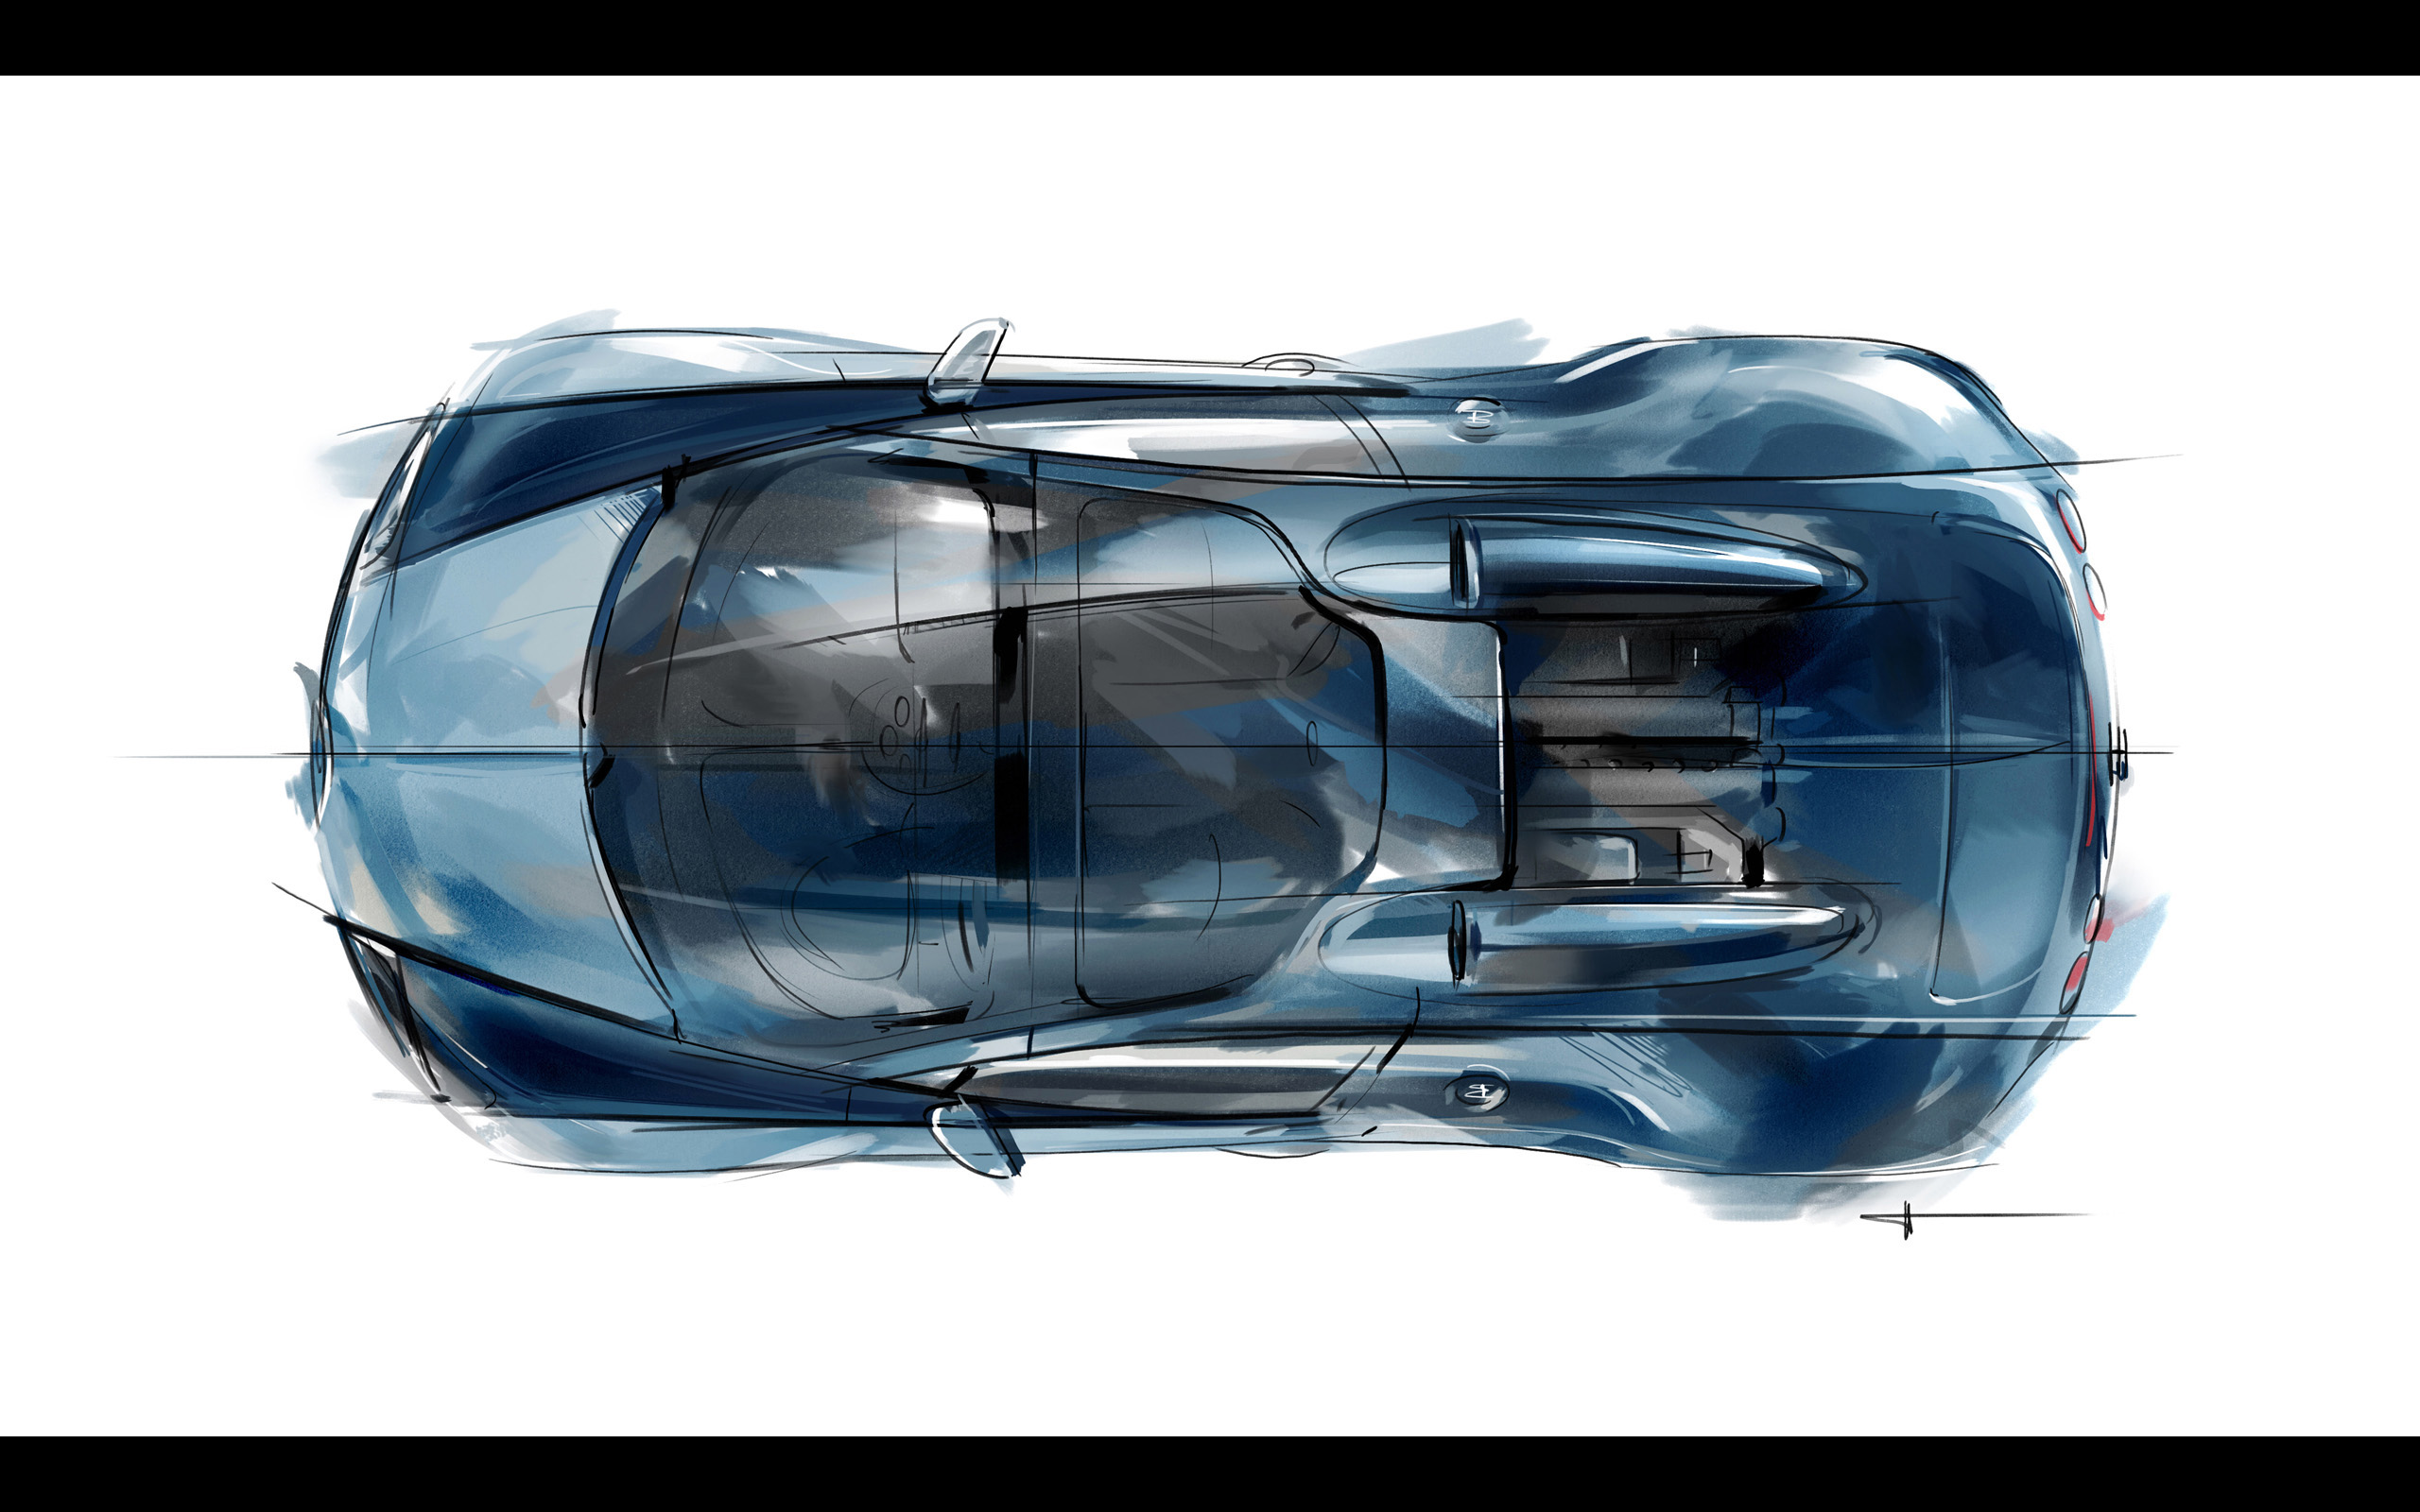 2013, Bugatti, Veyron, Grand, Sport, Roadster, Vitesse, Jp wimille, Supercar, Supercars Wallpaper